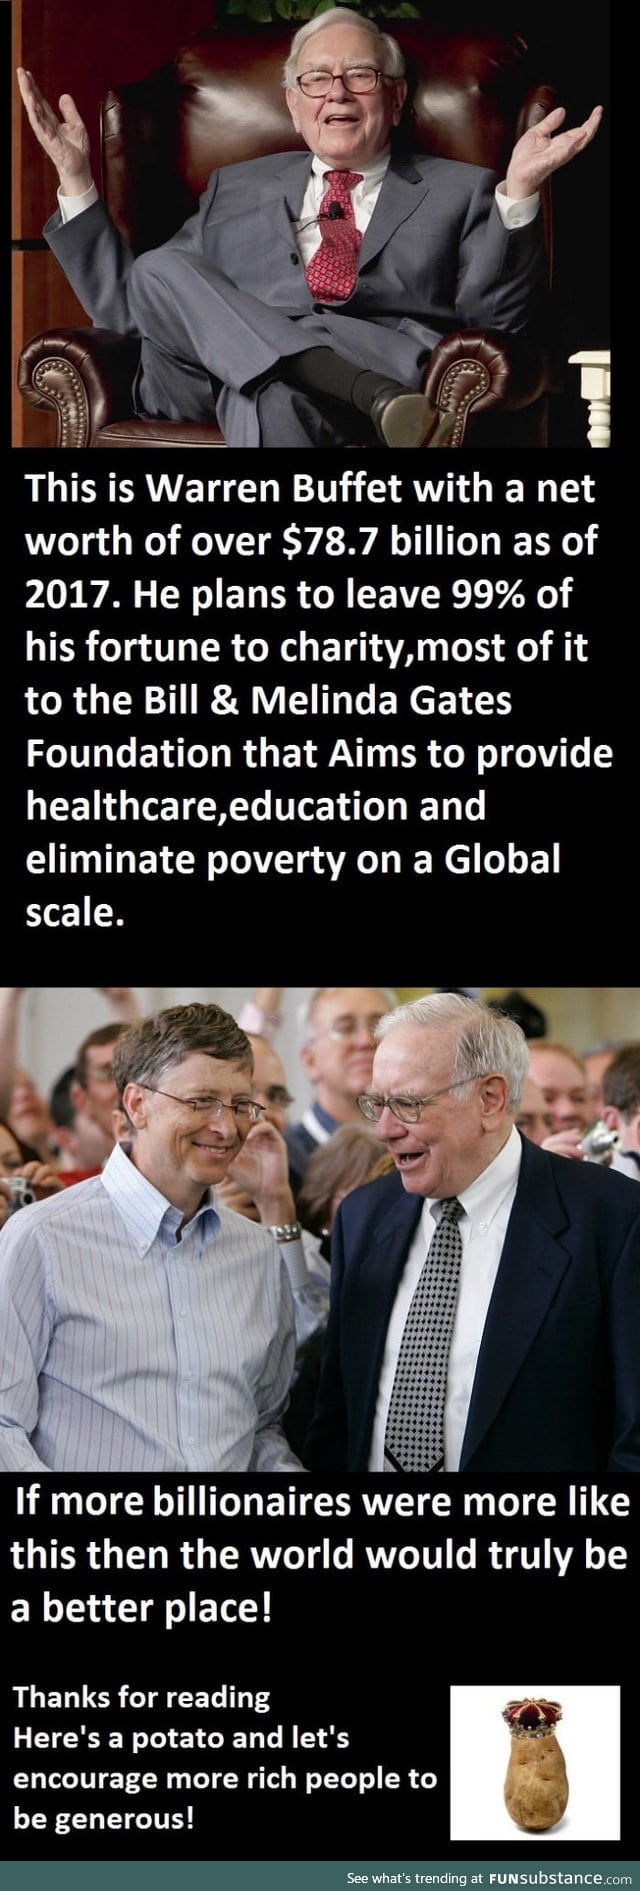 We need more billionaires like him